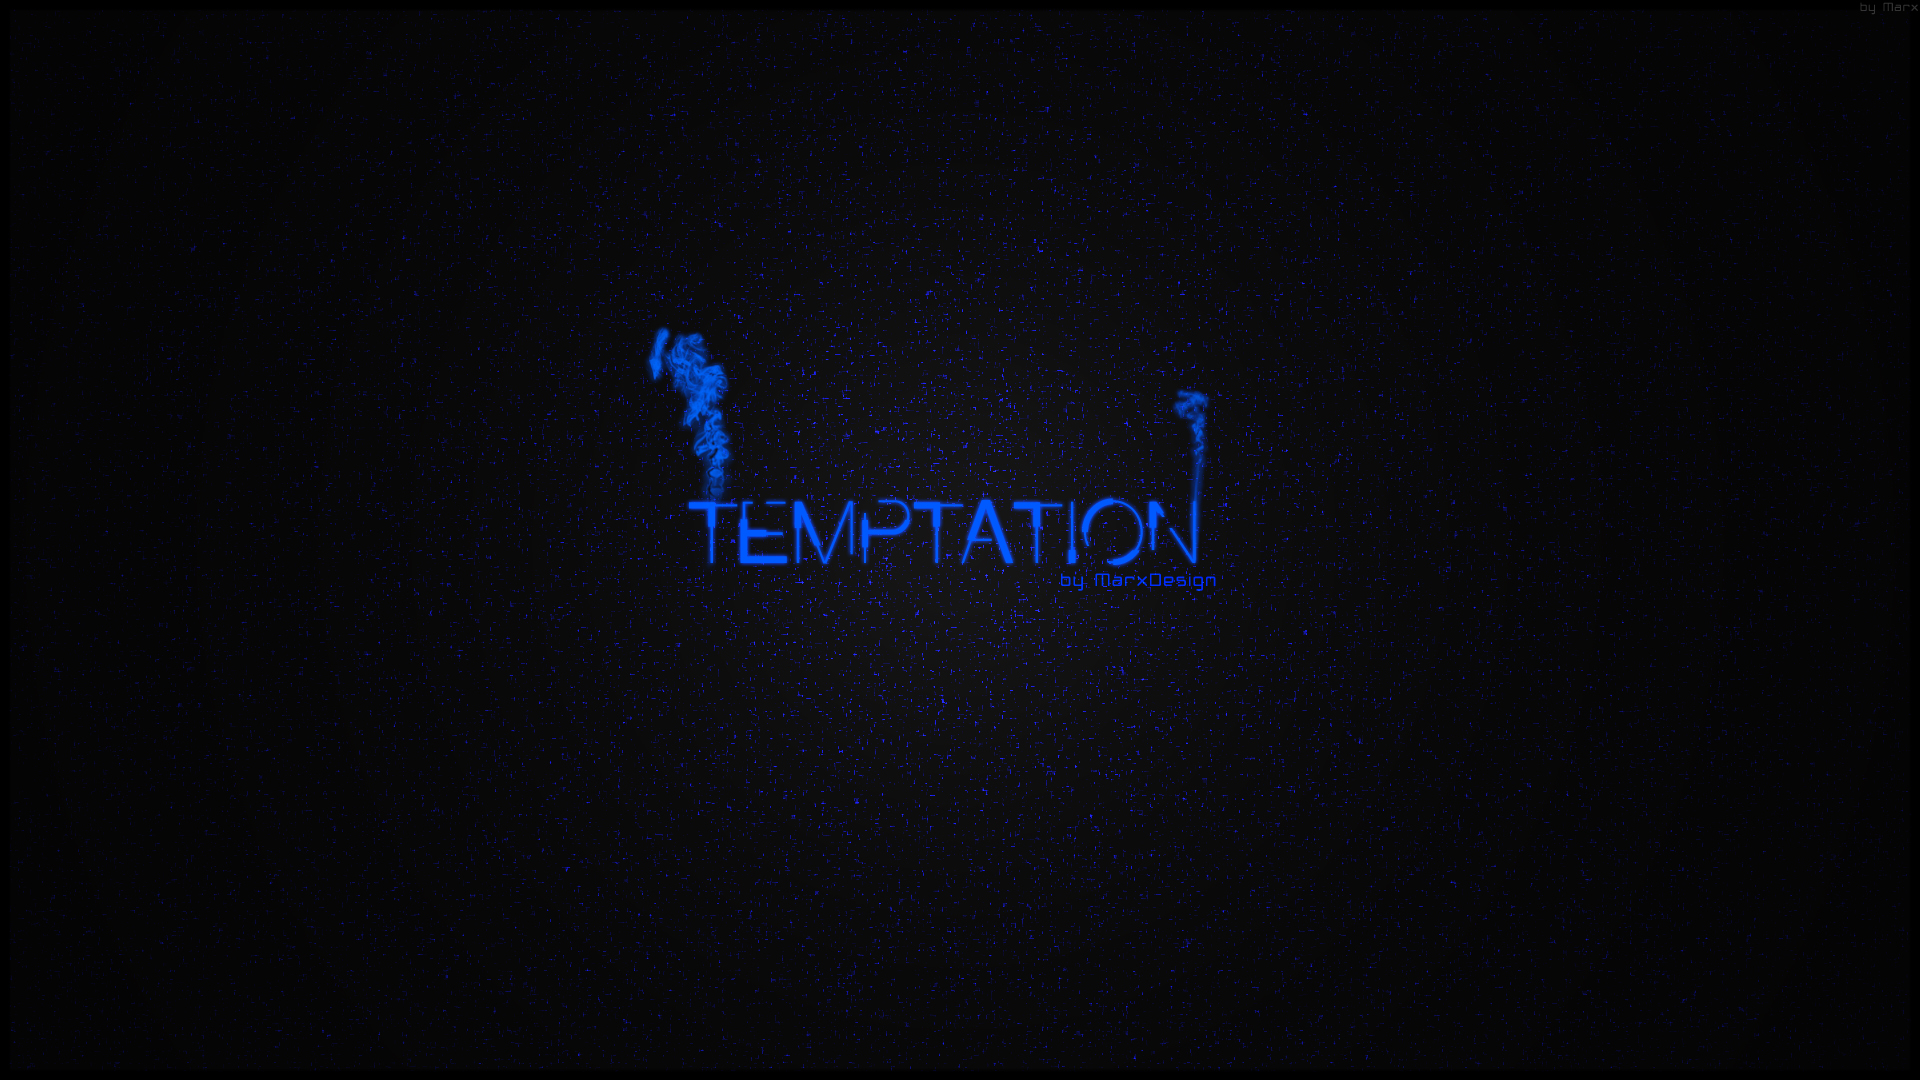 Temptation Wallpaper By Marxdesign Gfx